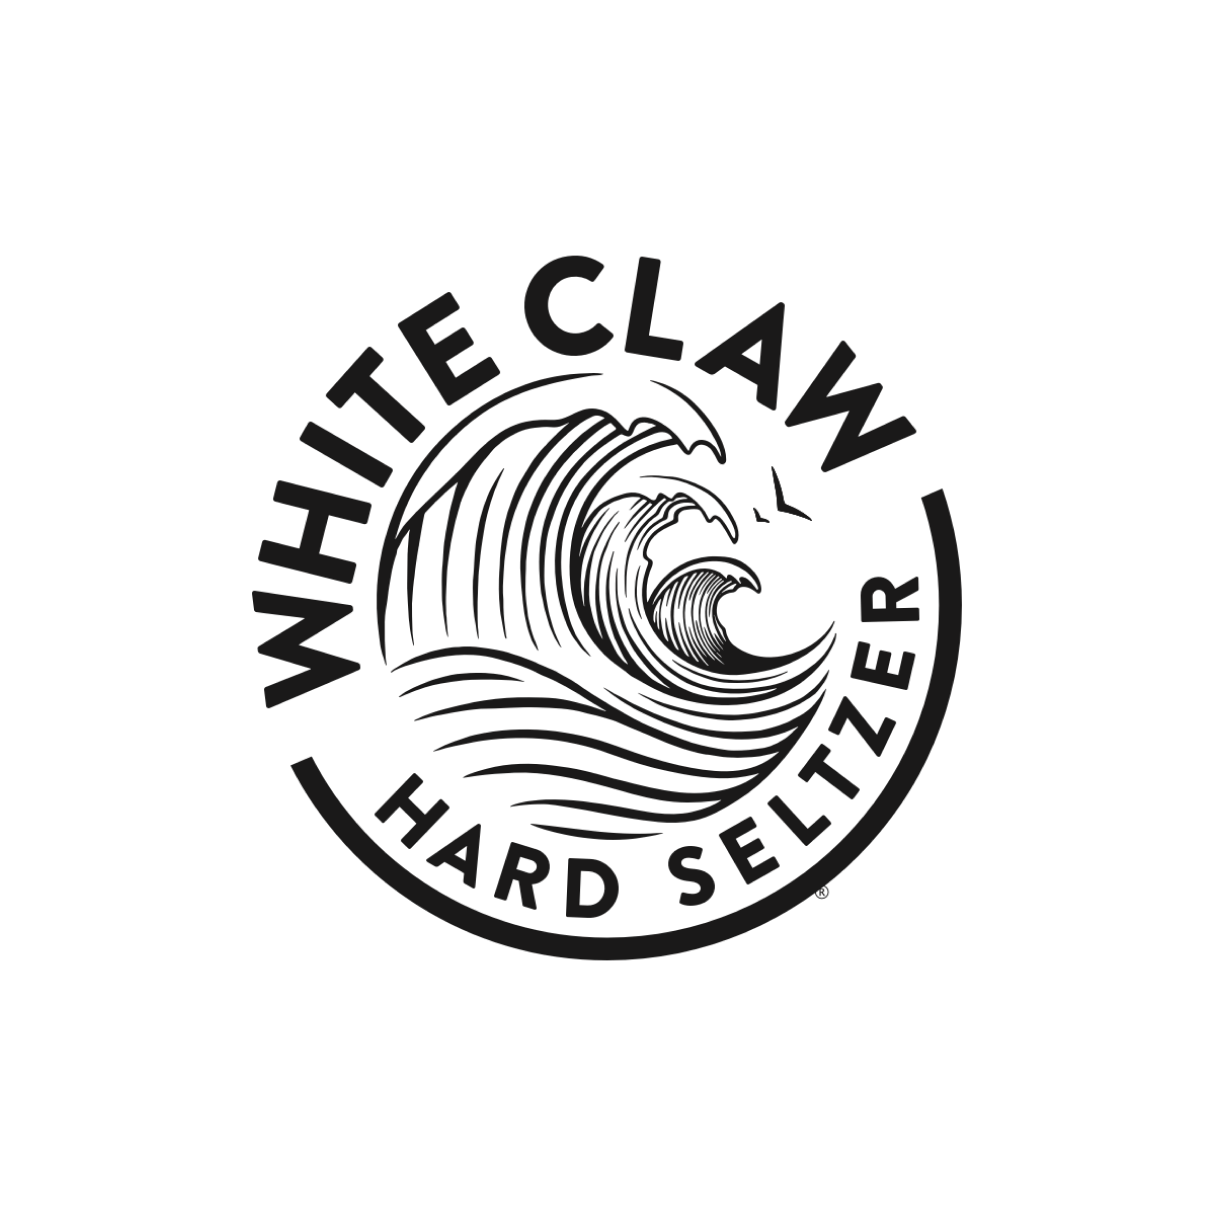 White Claw Logo